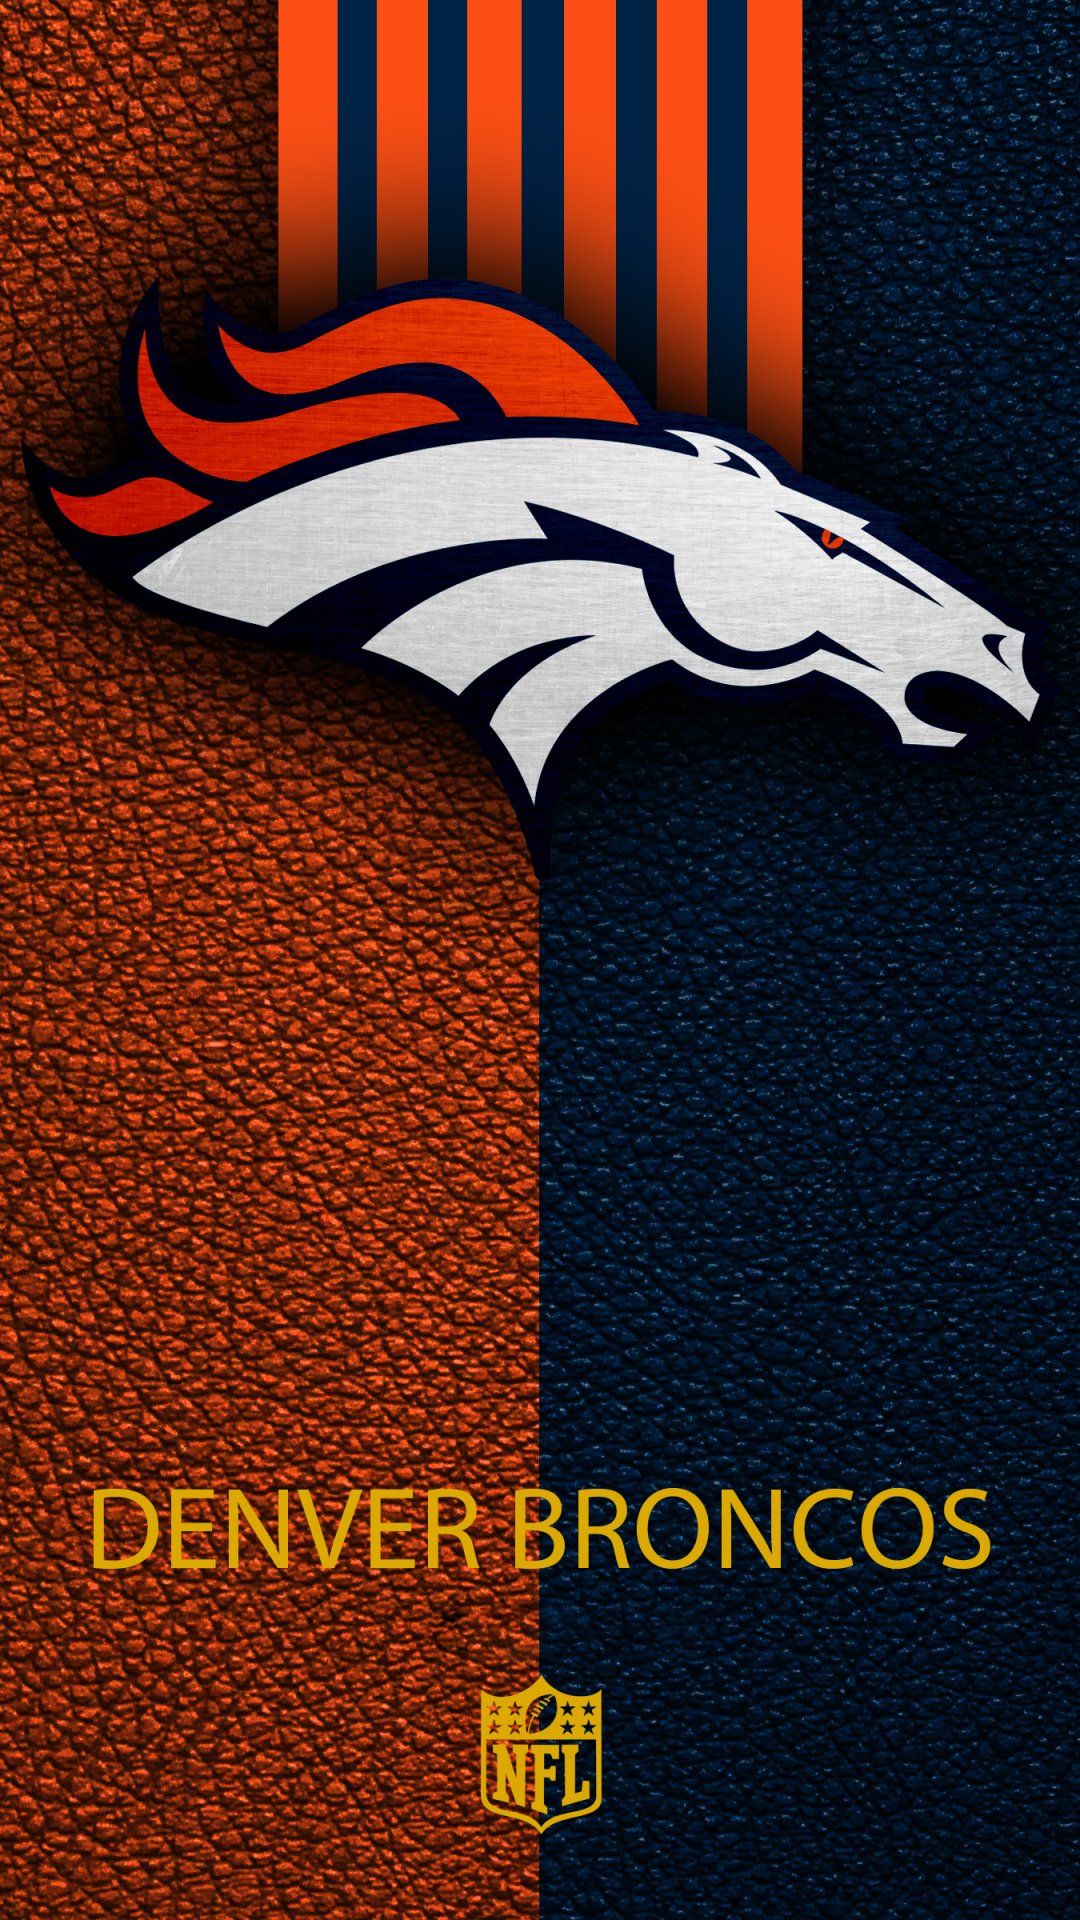 Denver Broncos 2022 wallpaper by Giovanipp - Download on ZEDGE™